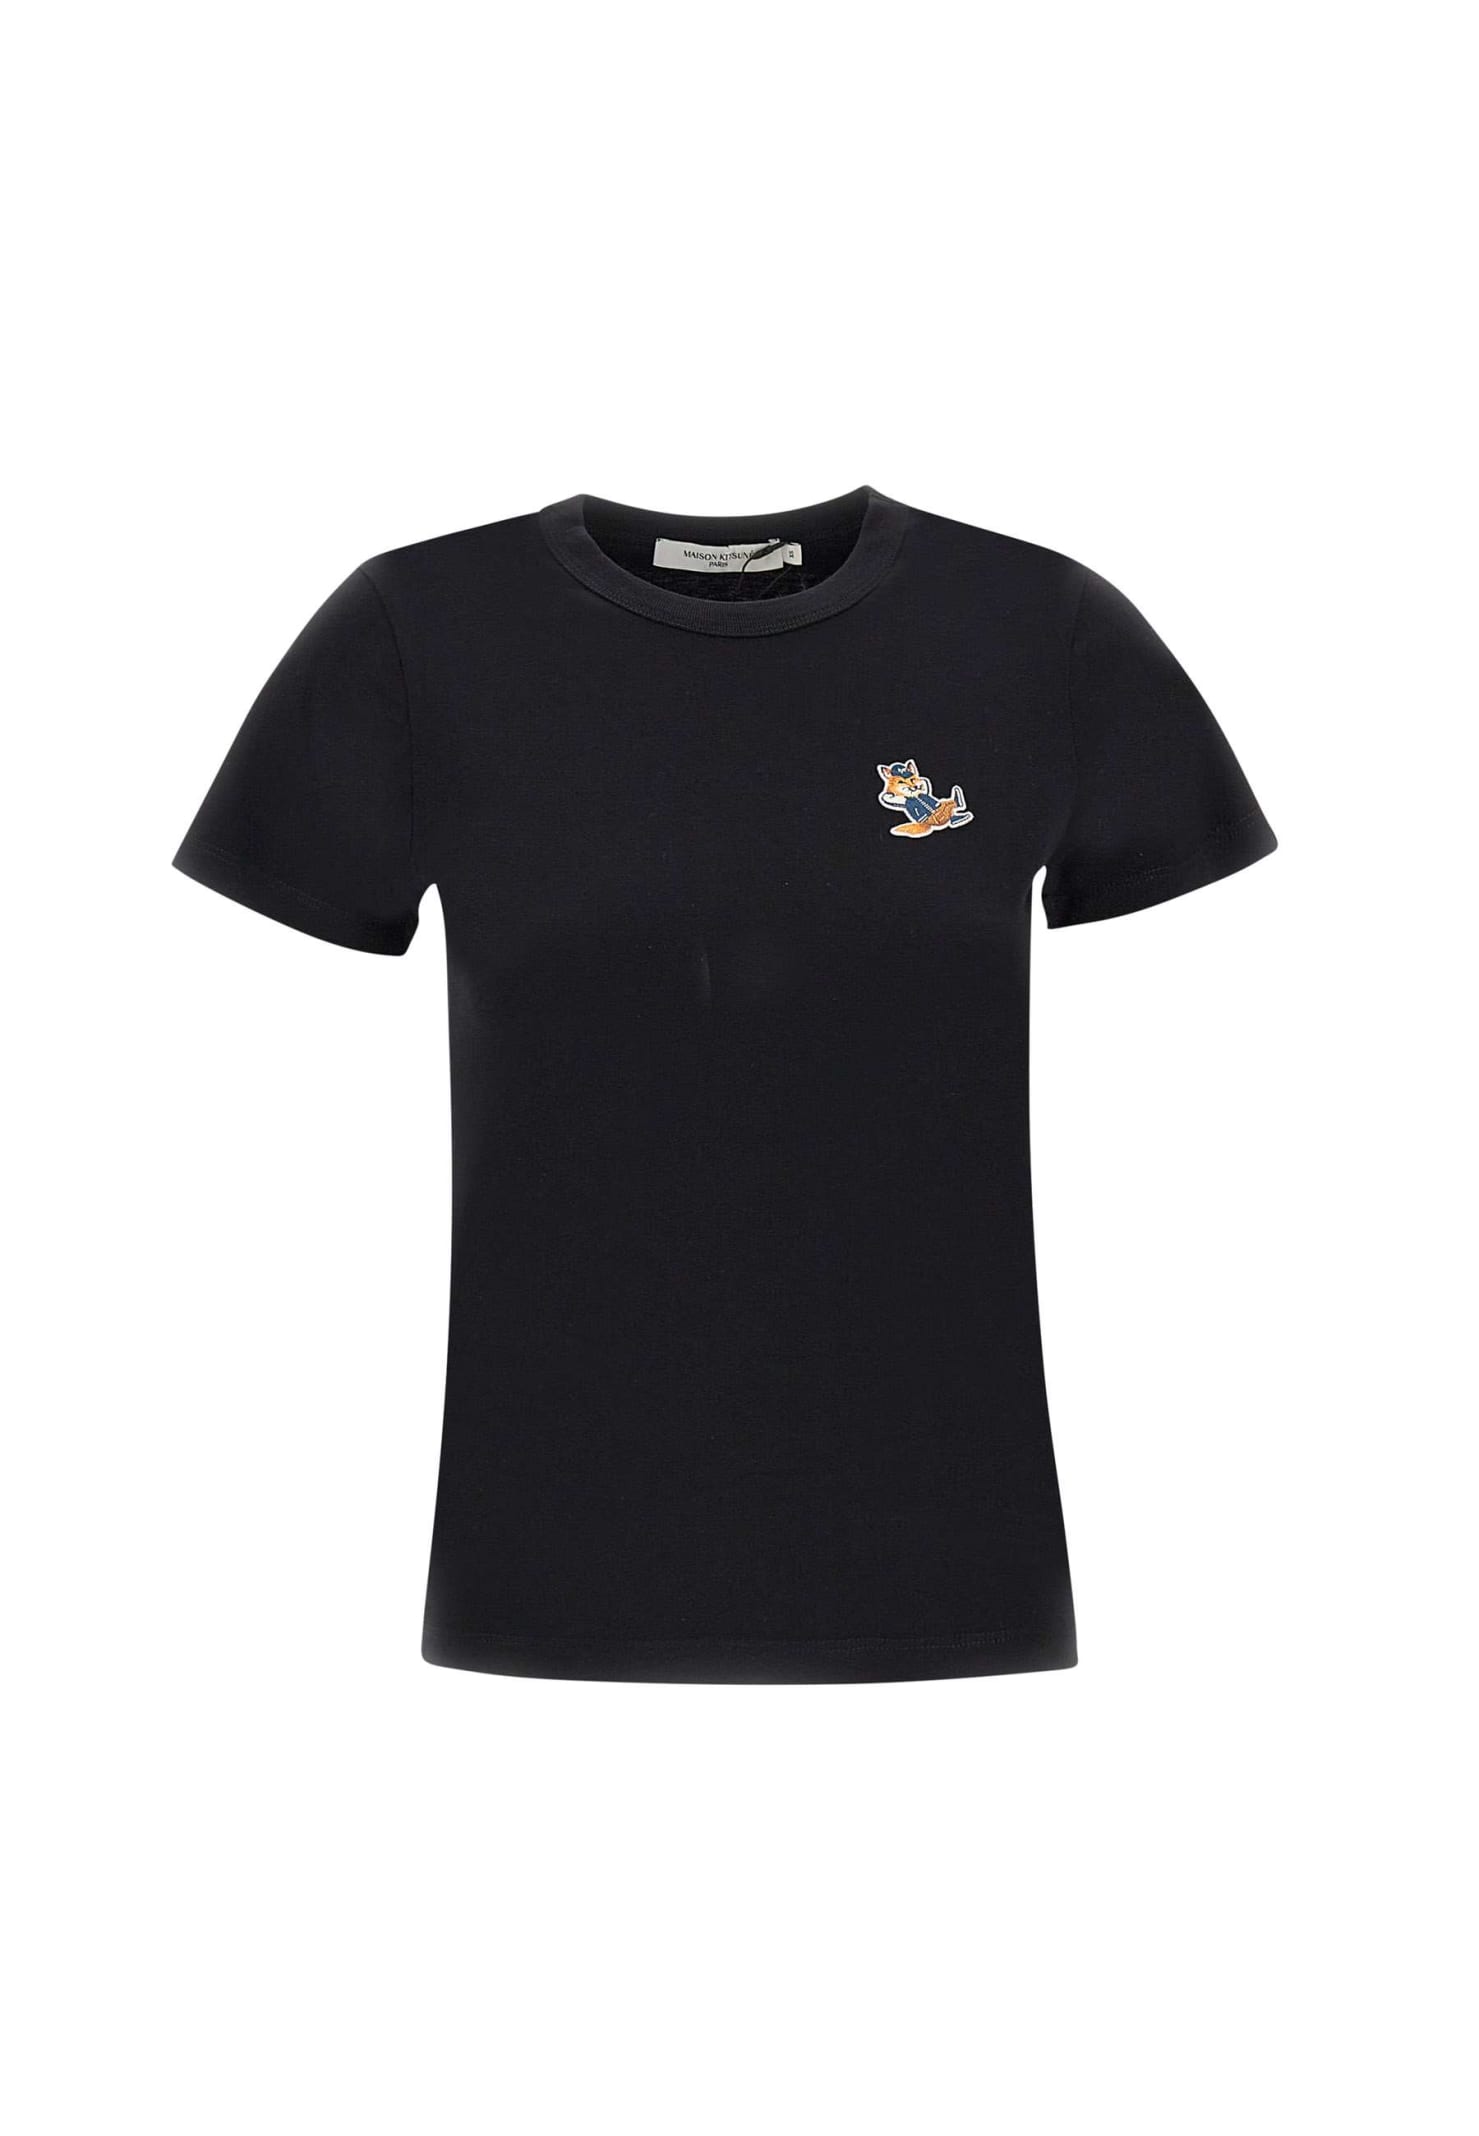 Maison Kitsuné Cotton T-shirt In Black